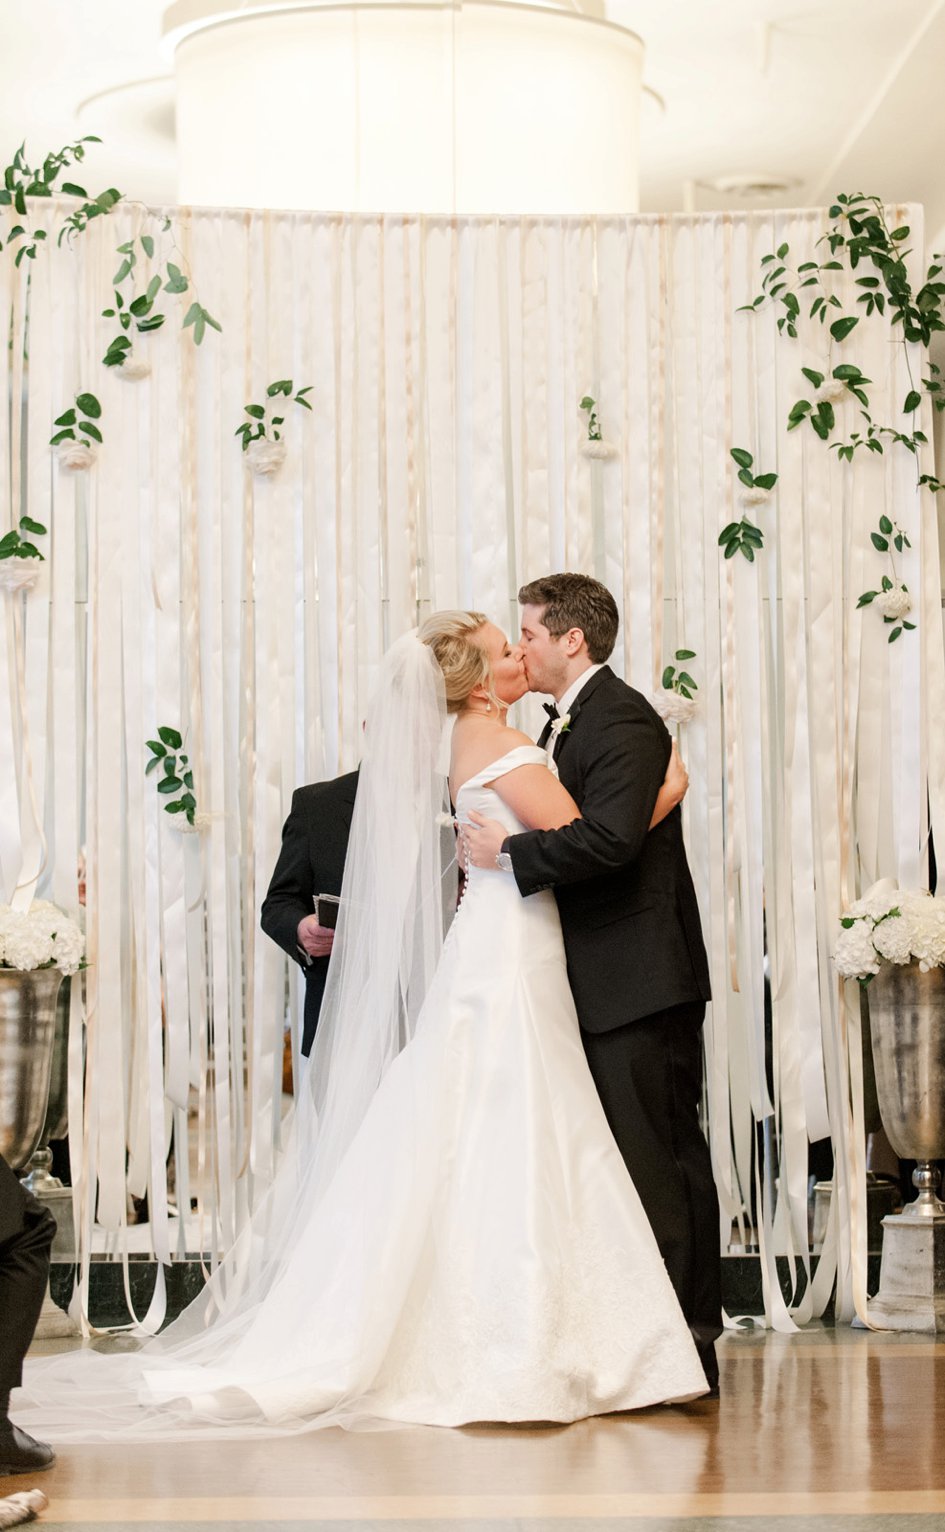 All-White Wedding at Calhoun Beach Club | Minnesota Bride